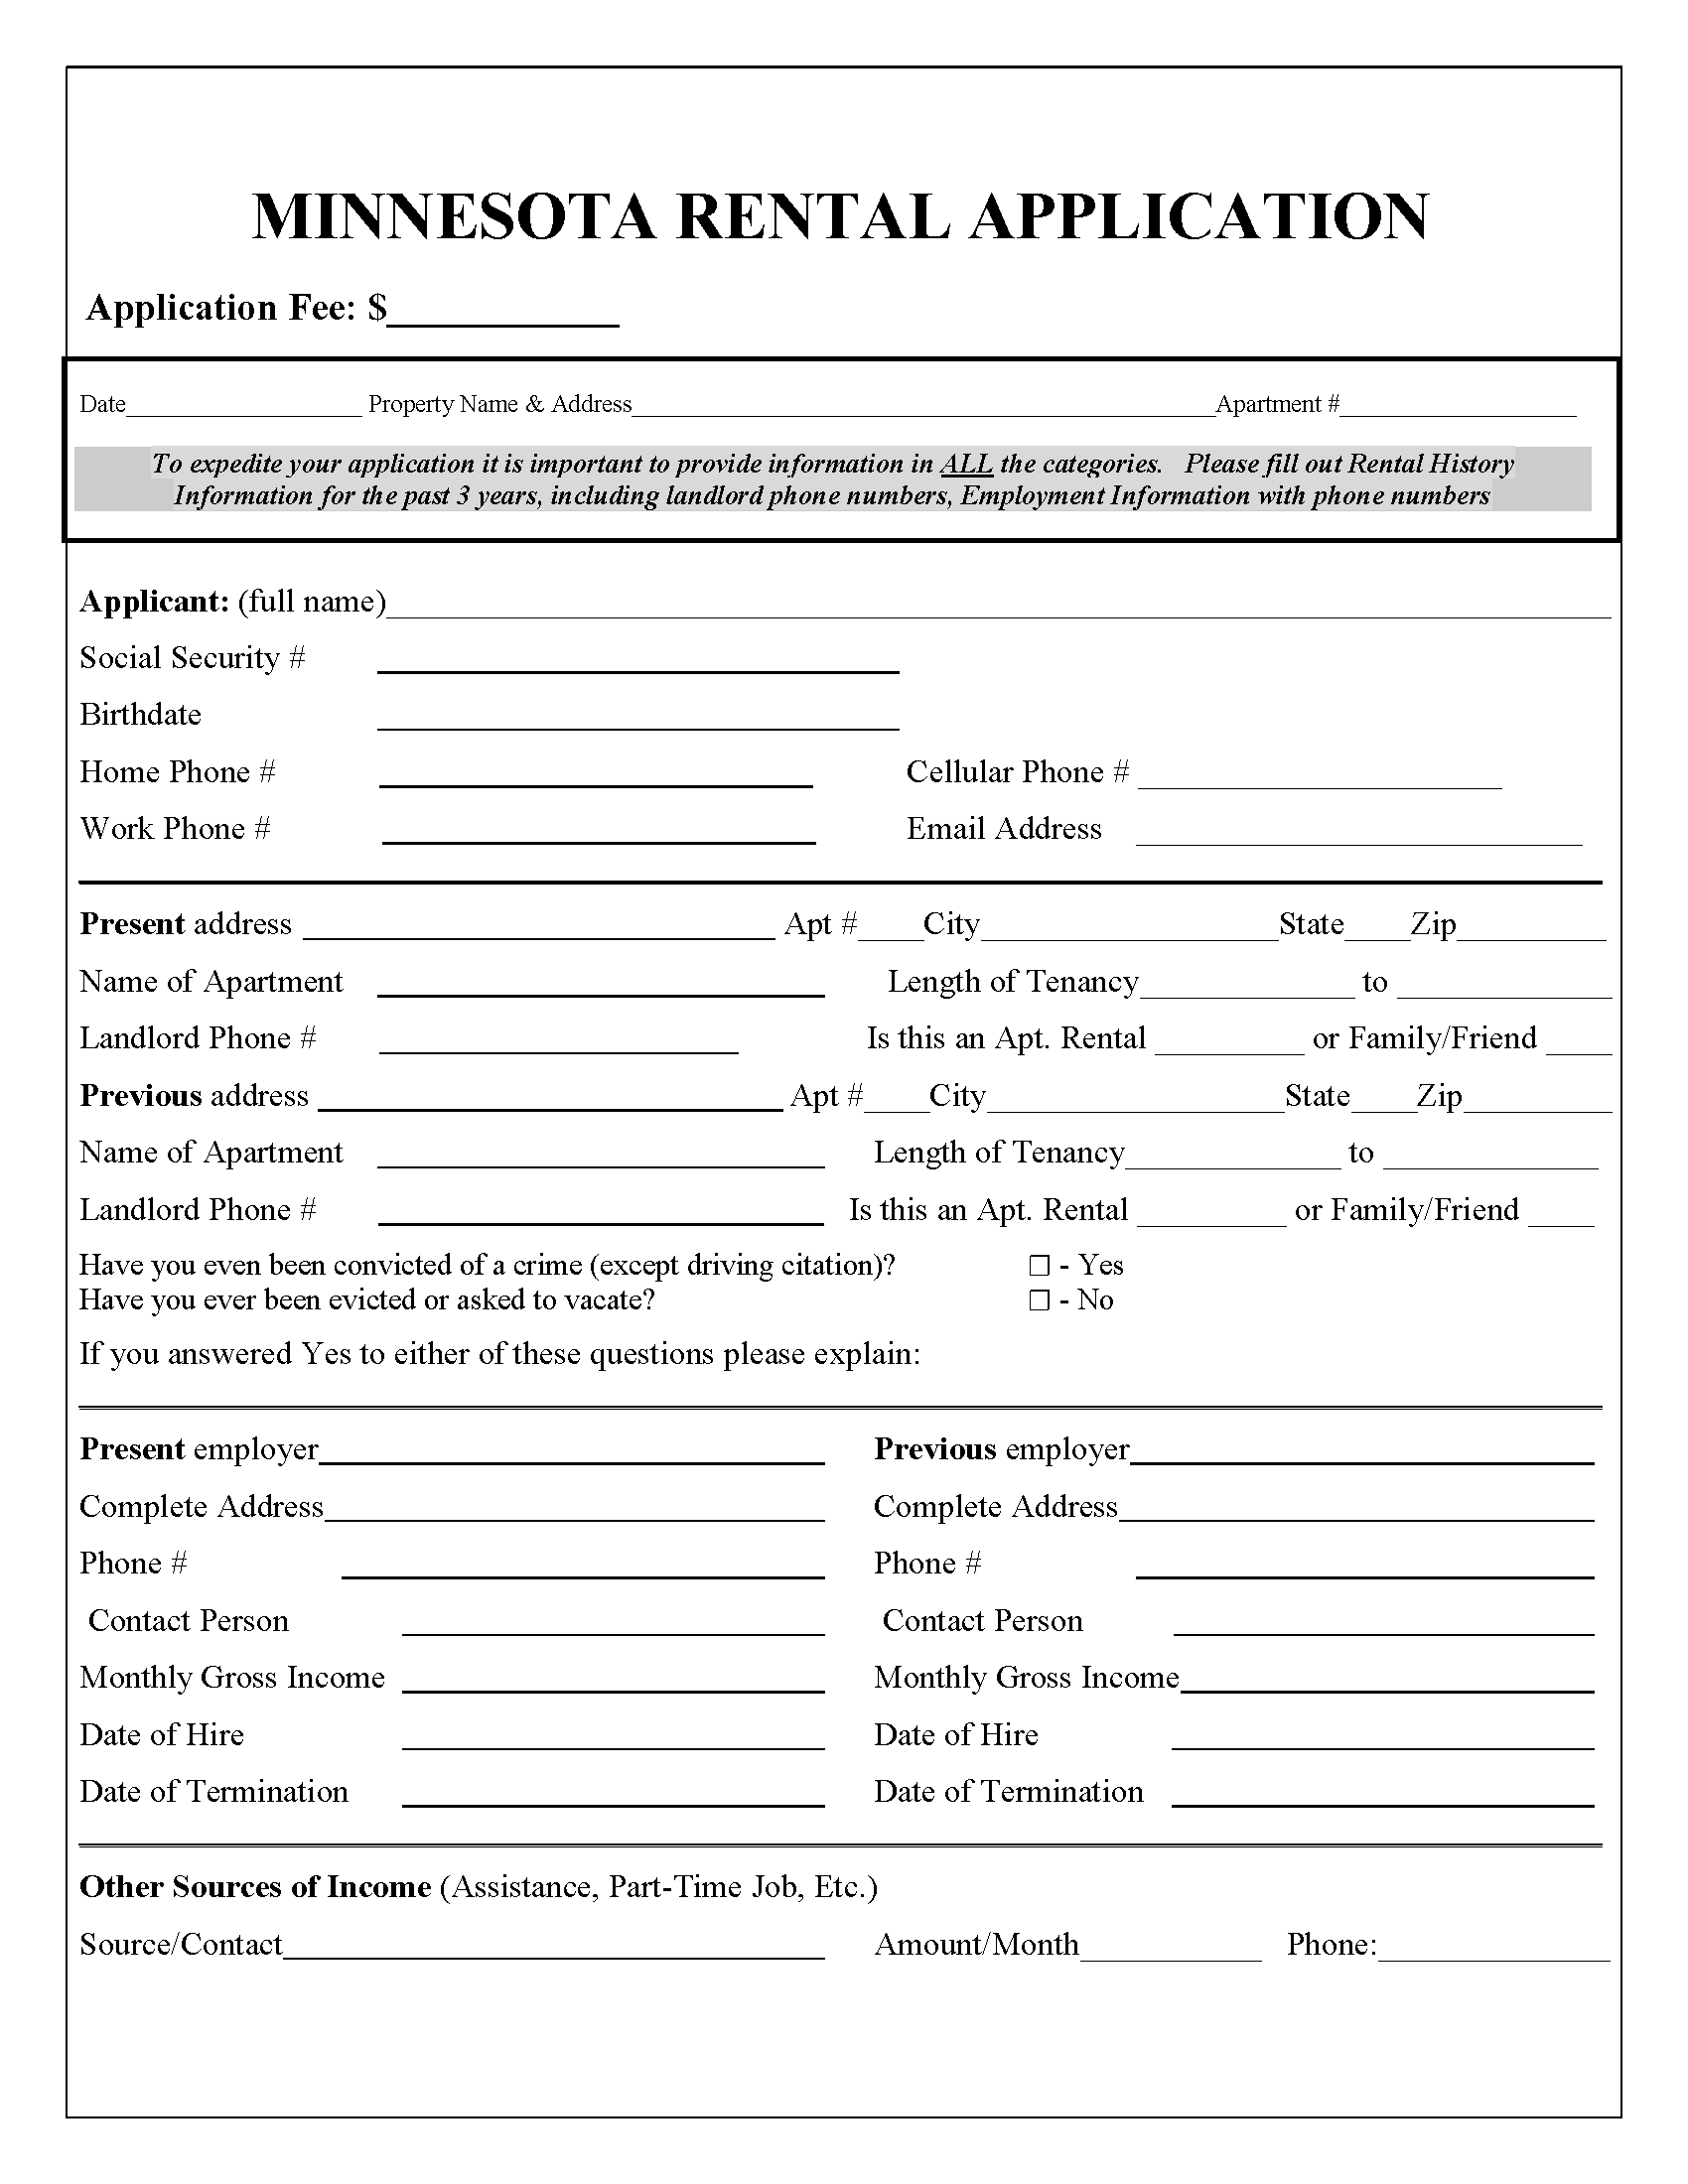 Minnesota Rental Application 